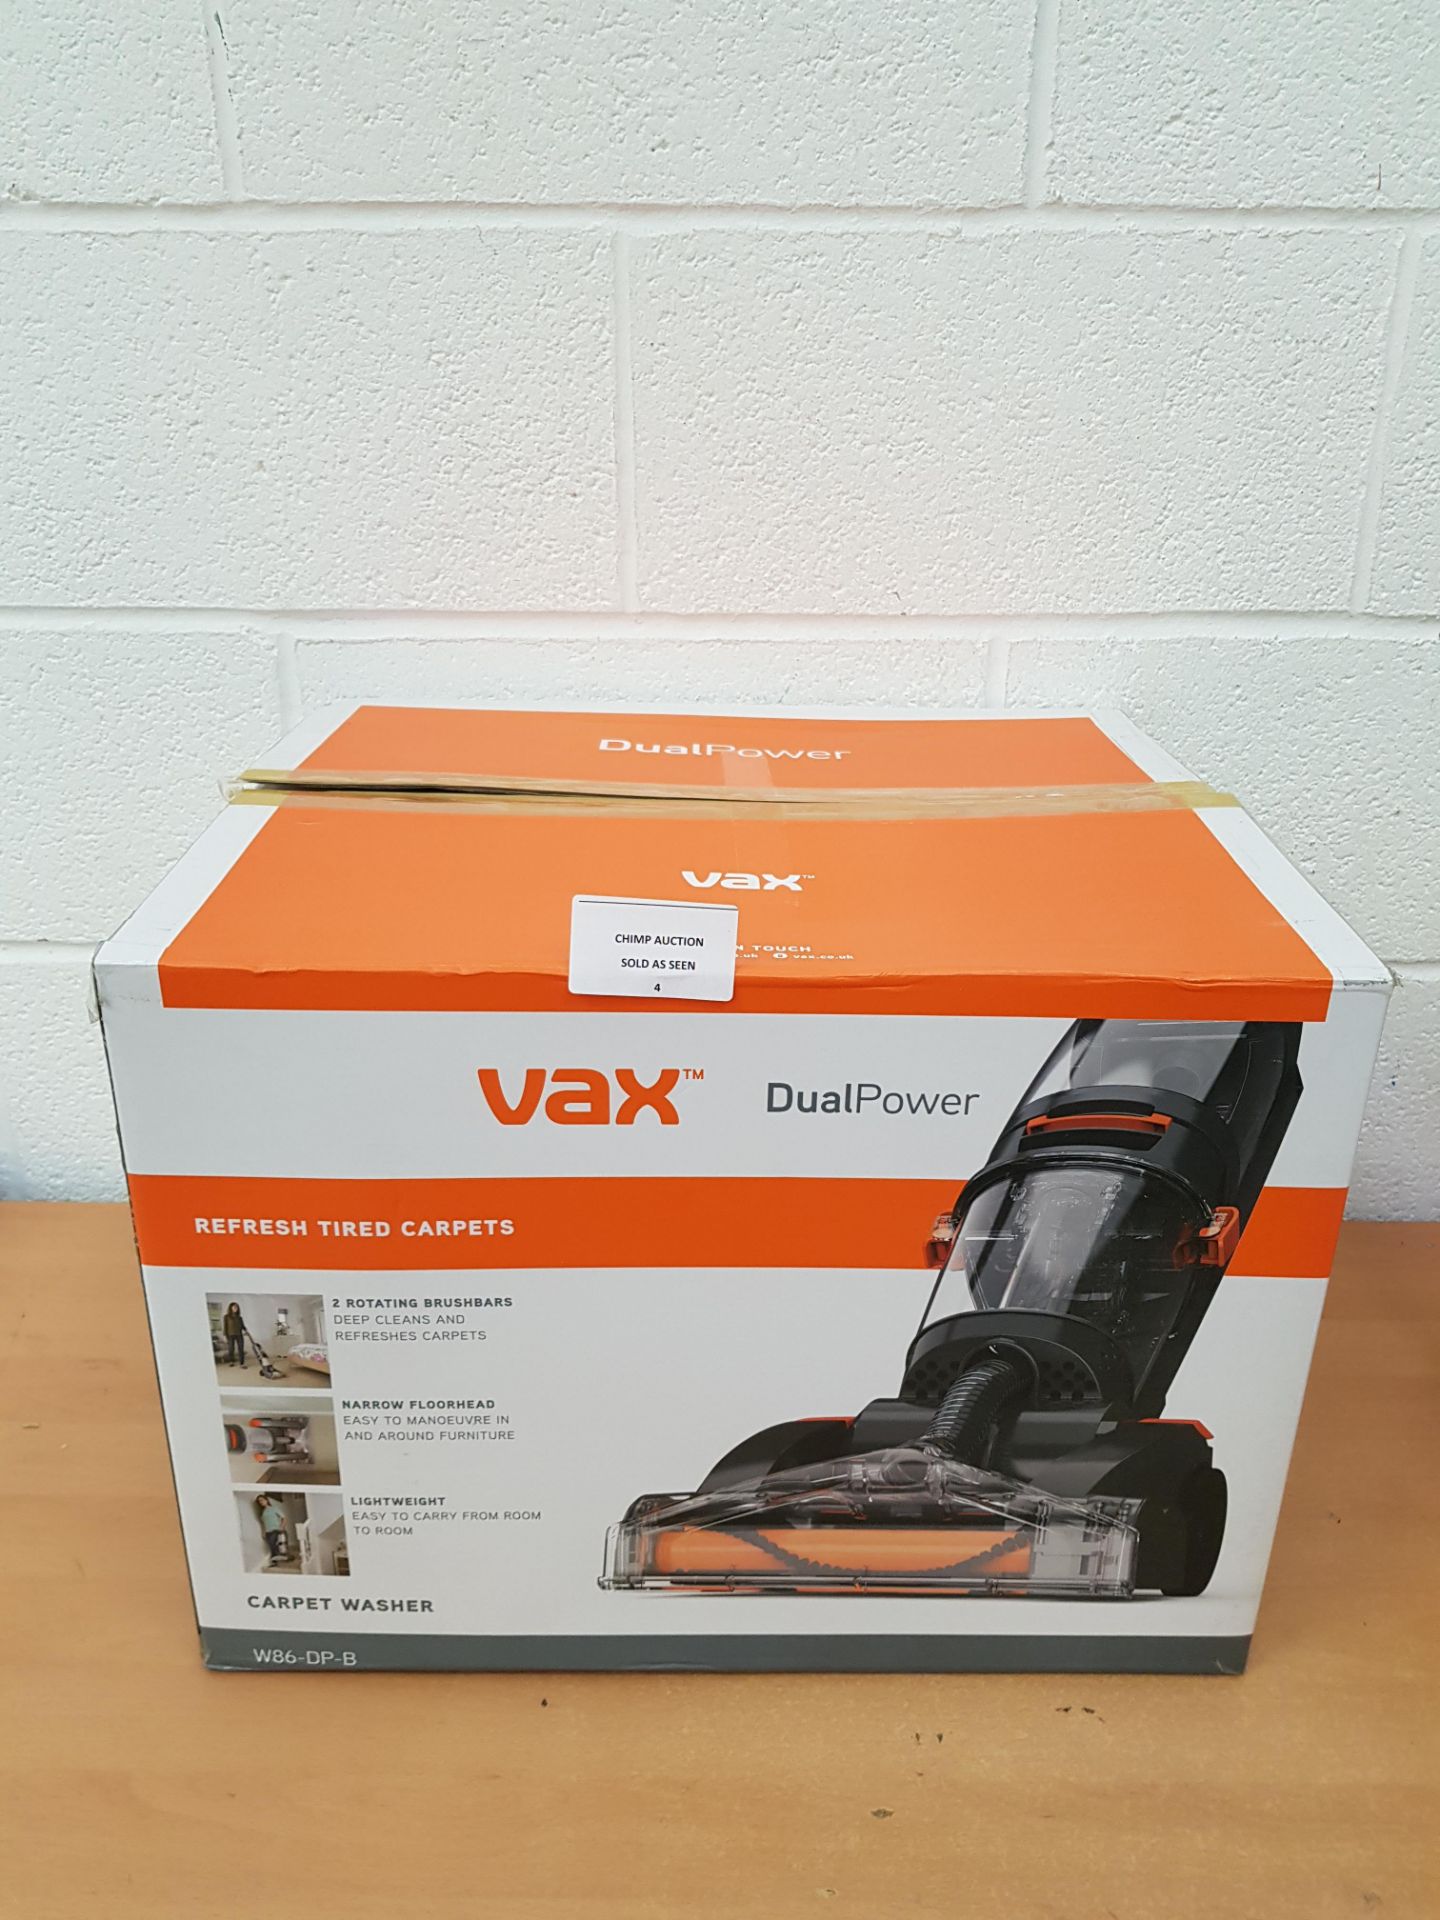 Vax W86-DP-B Dual Power Carpet Cleaner, 2.7 Litre, 800 W RRP £159.99.